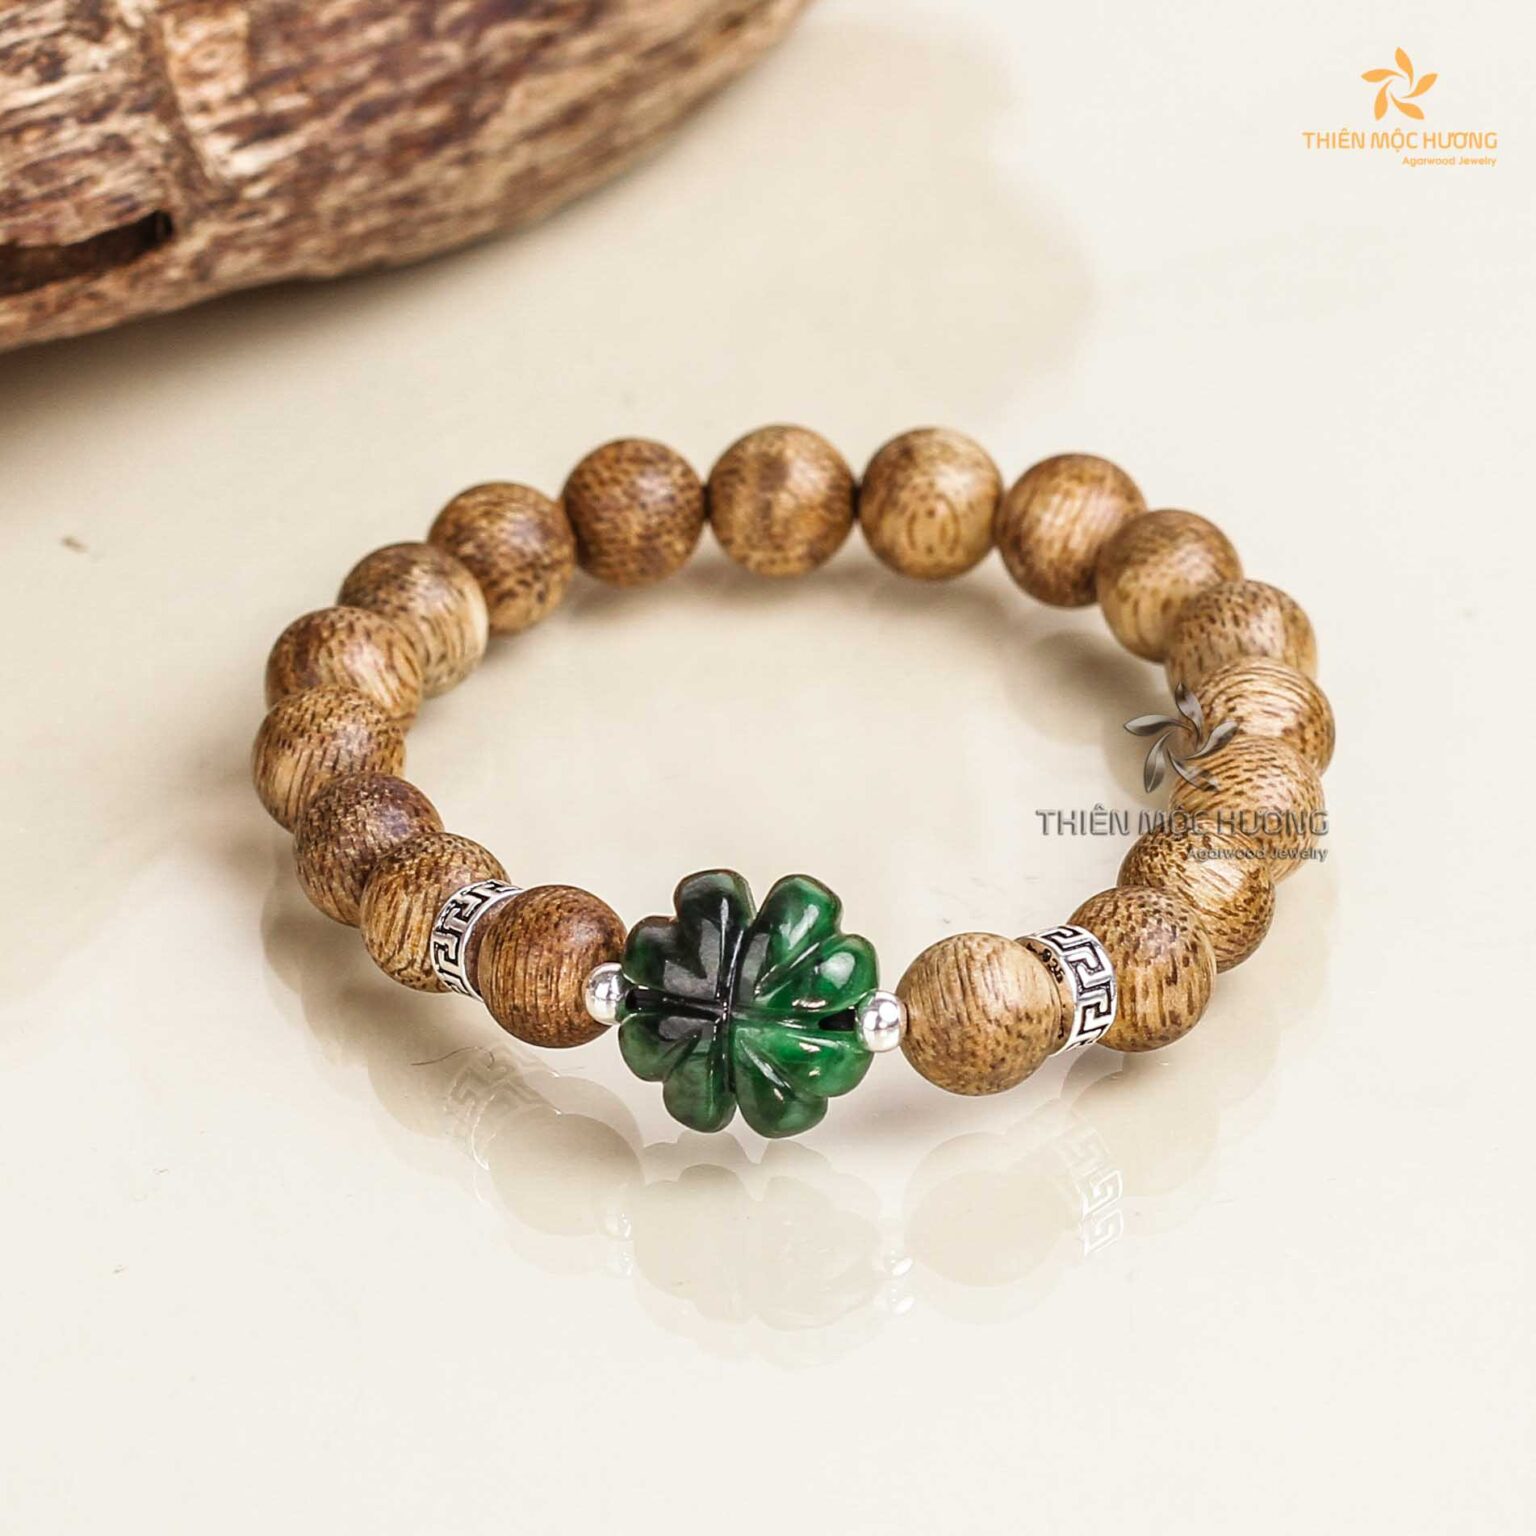 Four-leaf Clover Agarwood bracelet with Gemstone - Green - Vietnamese Toc Agarwood